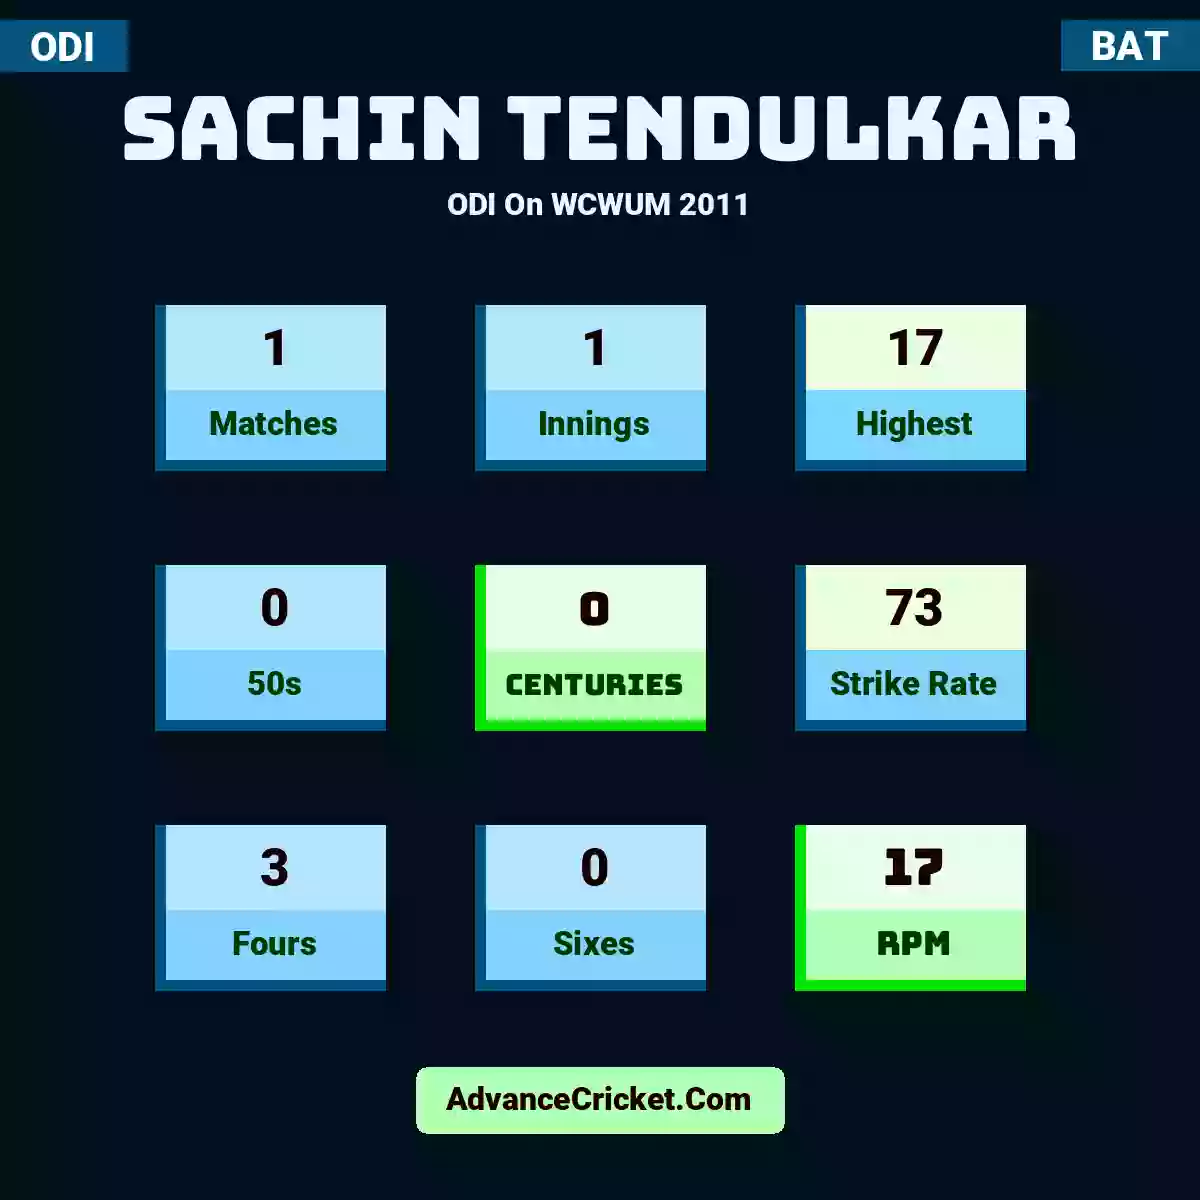 Sachin Tendulkar ODI  On WCWUM 2011, Sachin Tendulkar played 1 matches, scored 17 runs as highest, 0 half-centuries, and 0 centuries, with a strike rate of 73. S.Tendulkar hit 3 fours and 0 sixes, with an RPM of 17.